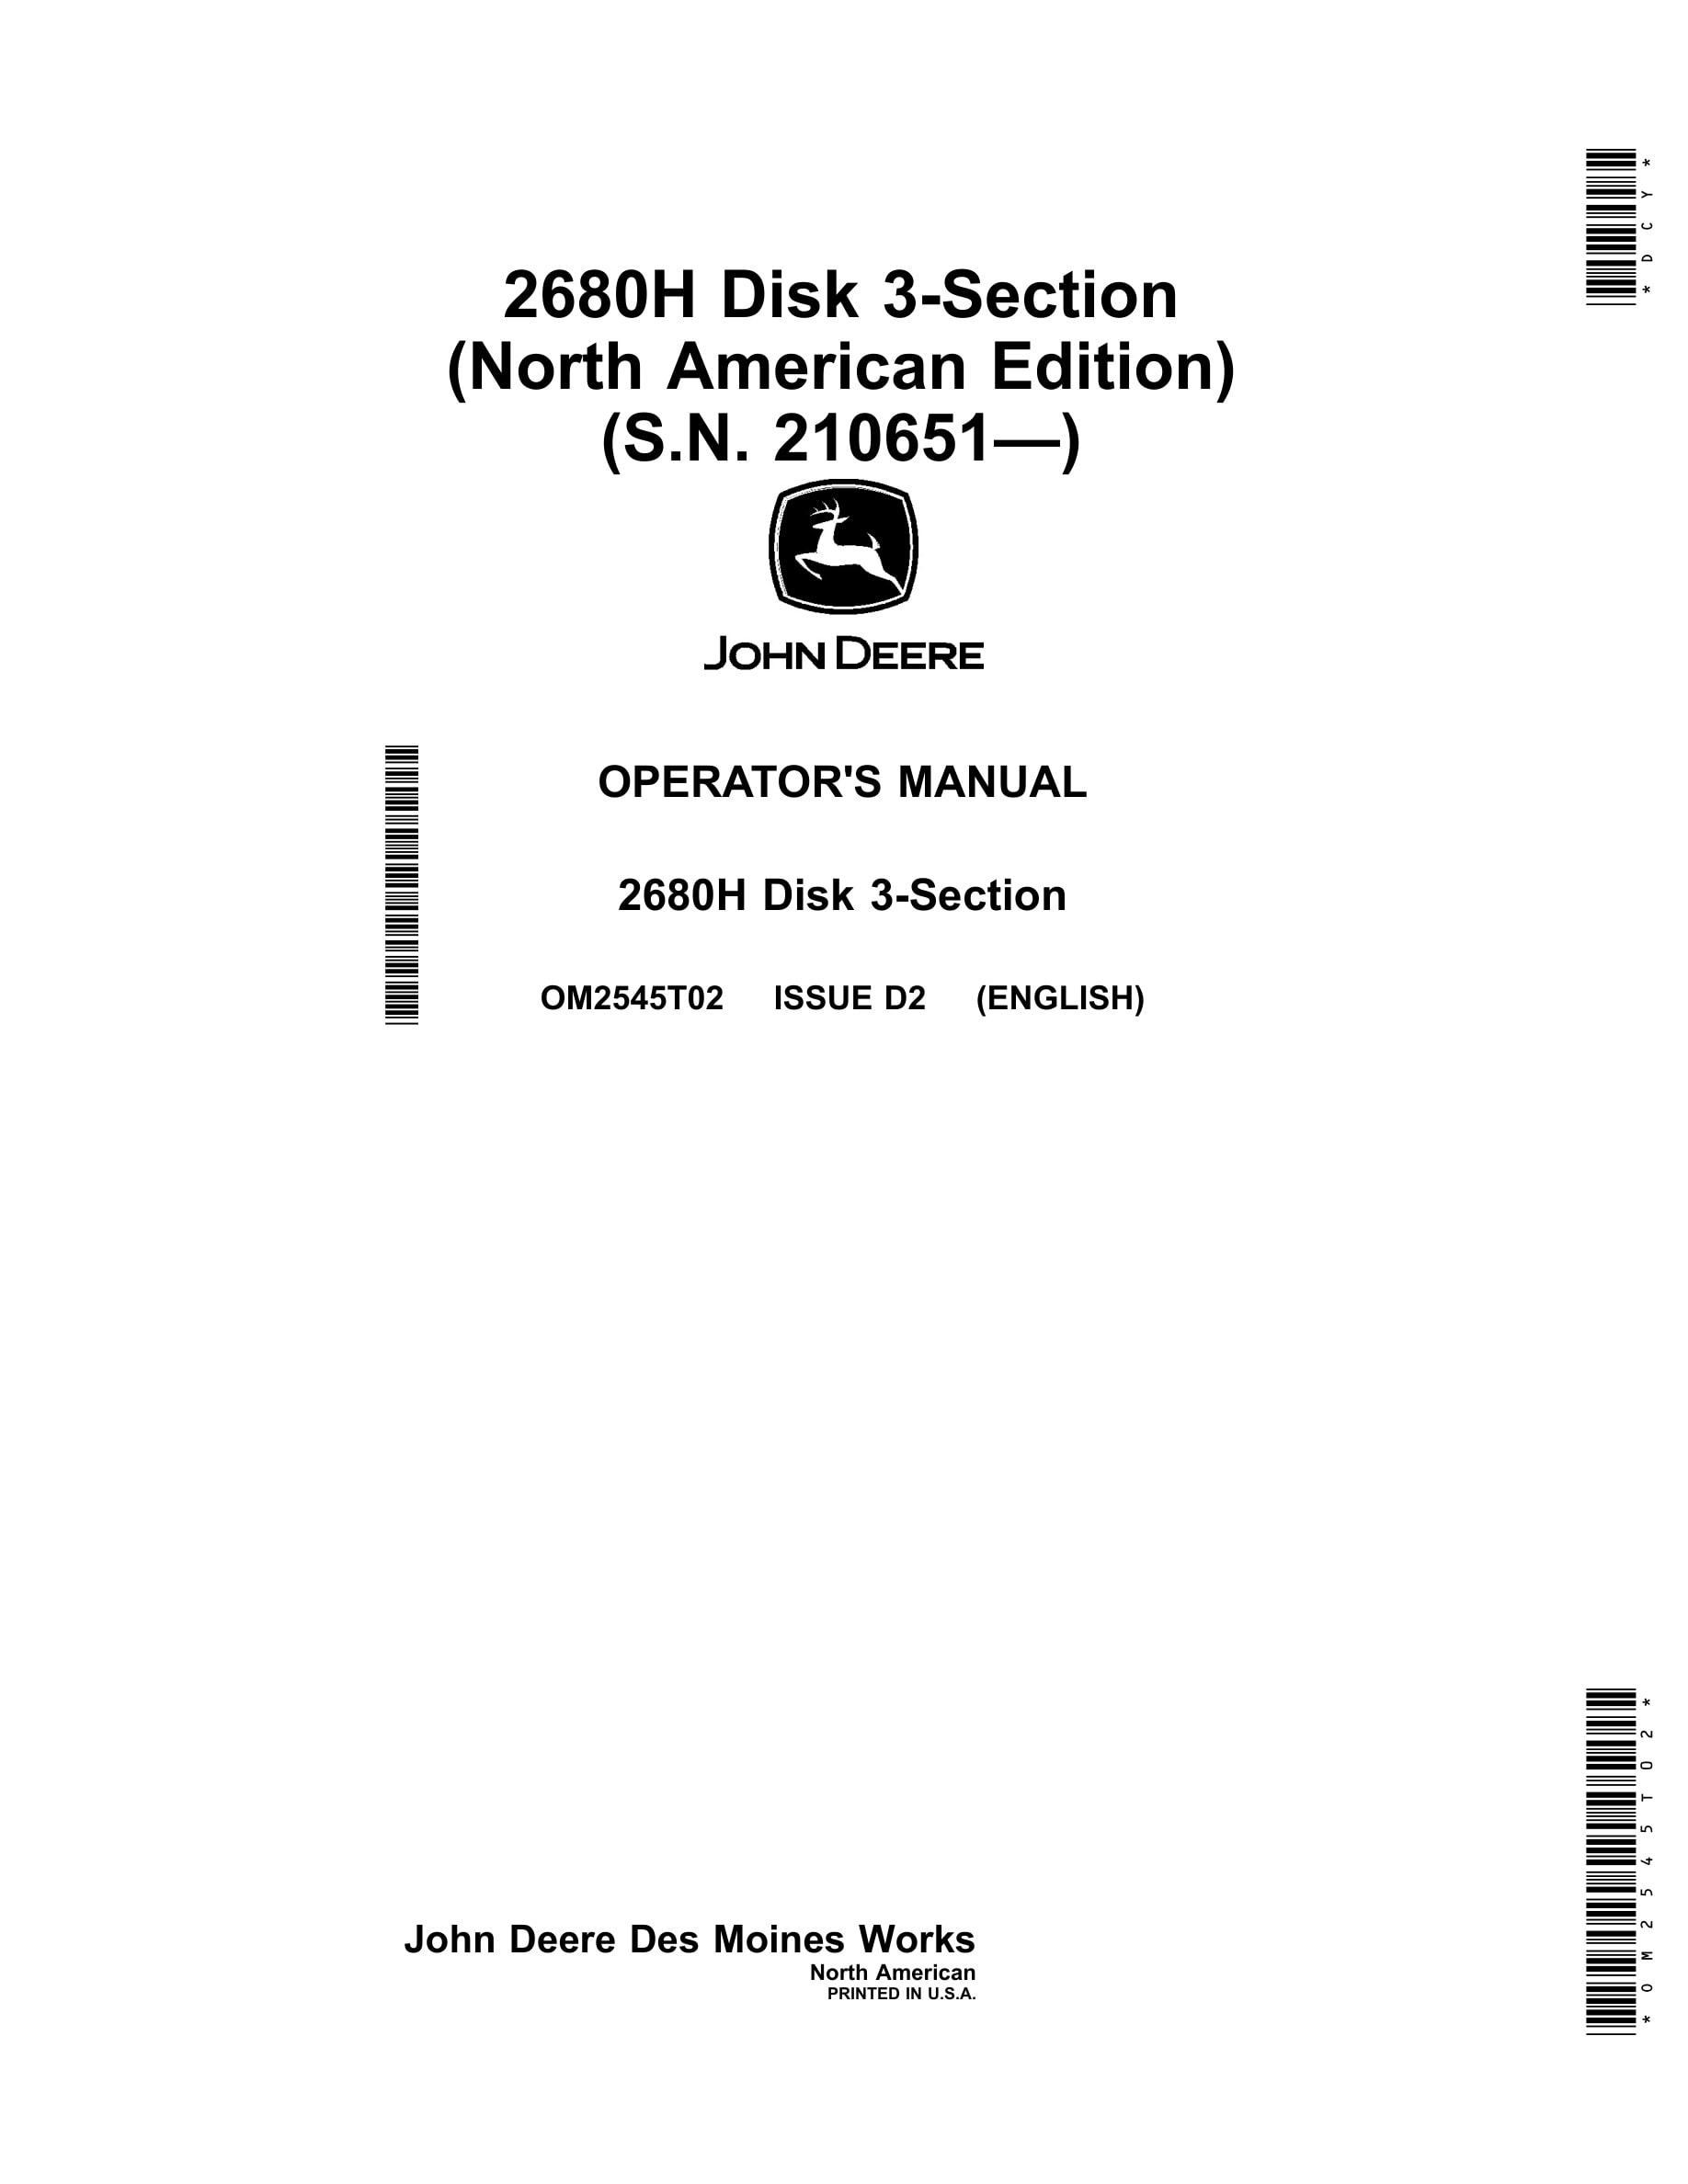 John Deere 2680H Disk 3-Section Operator Manual OM2545T02-1